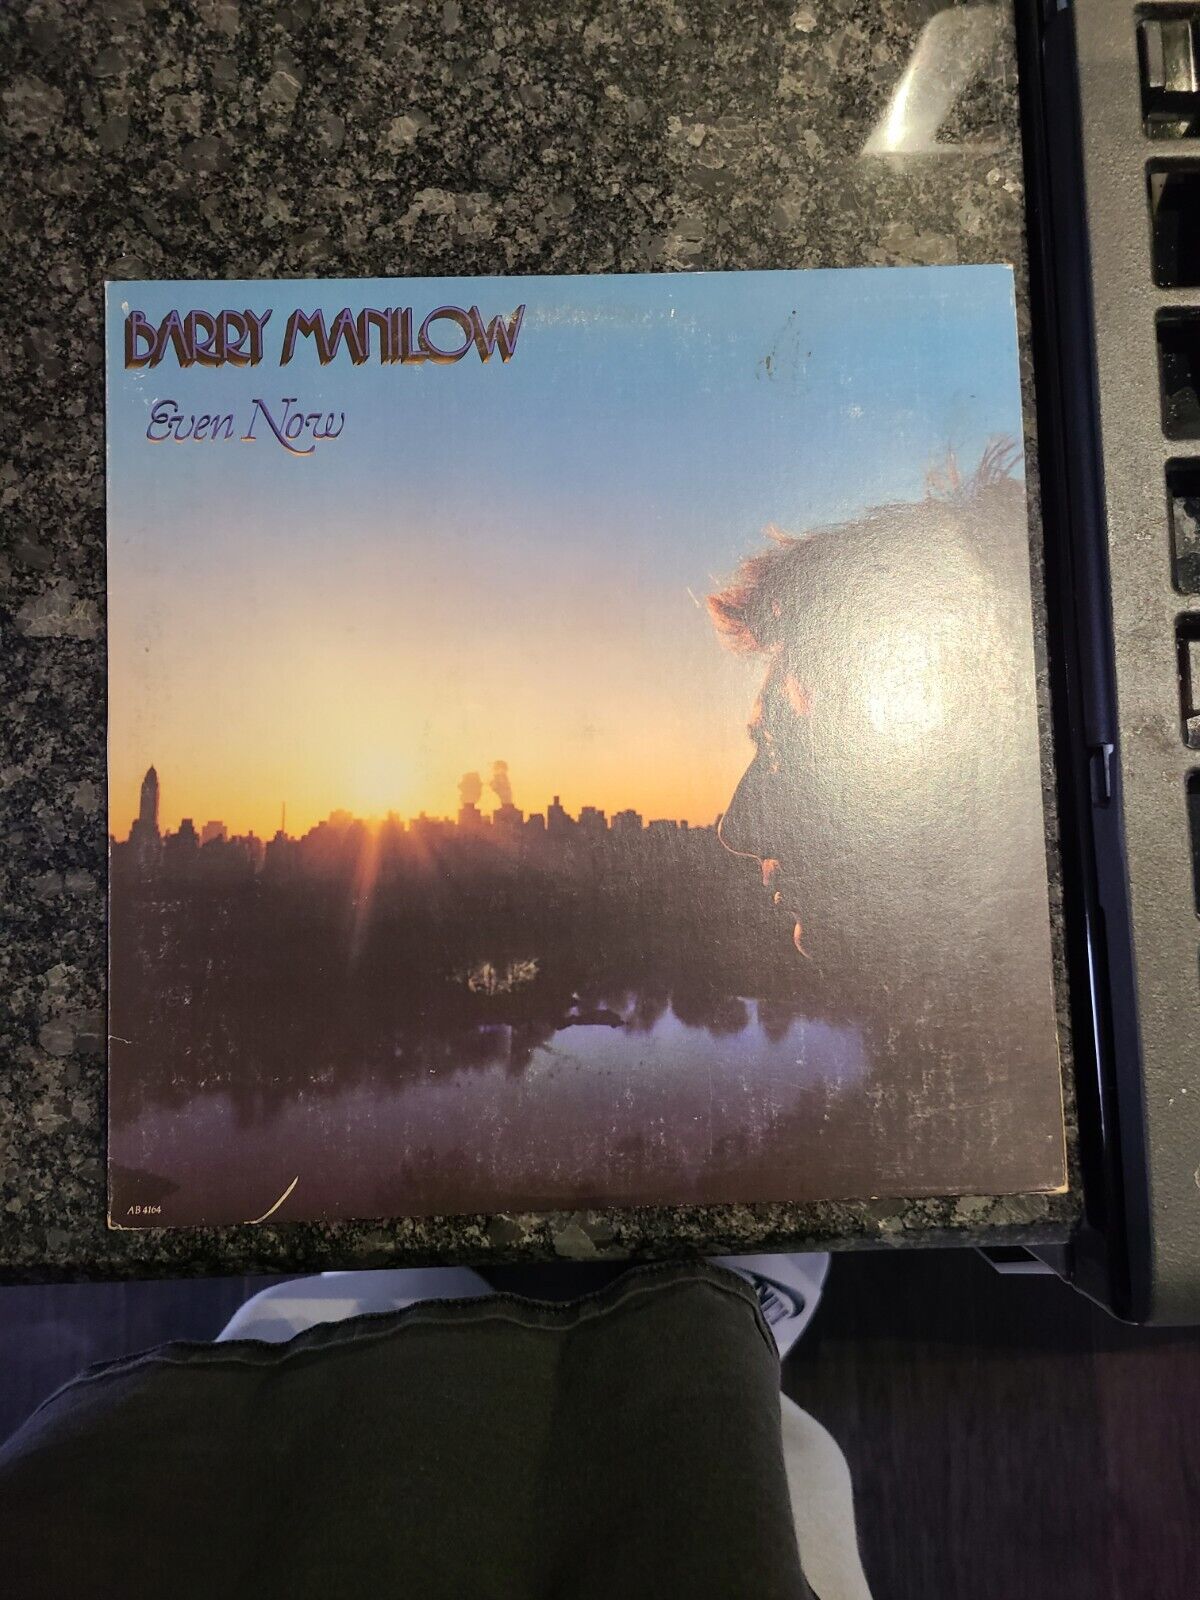 Barry Manilow - Even Now - Vinyl Record LP Album - 1978 Arista Records